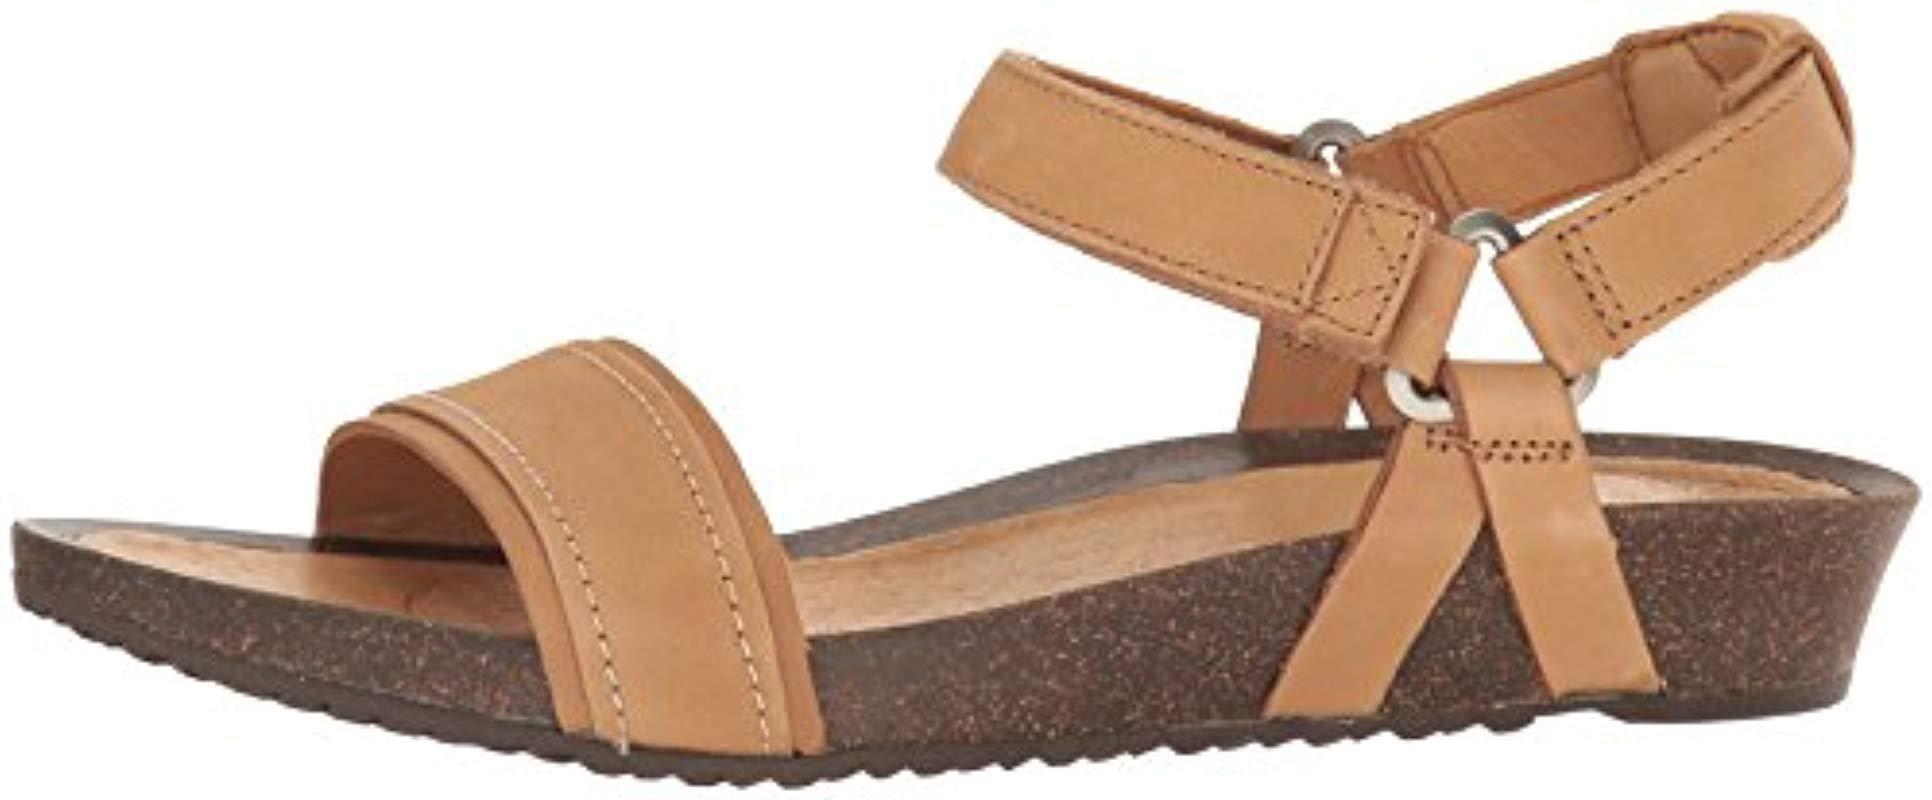 Teva Leather W Ysidro Stitch Sandal in Tan (Brown) - Lyst